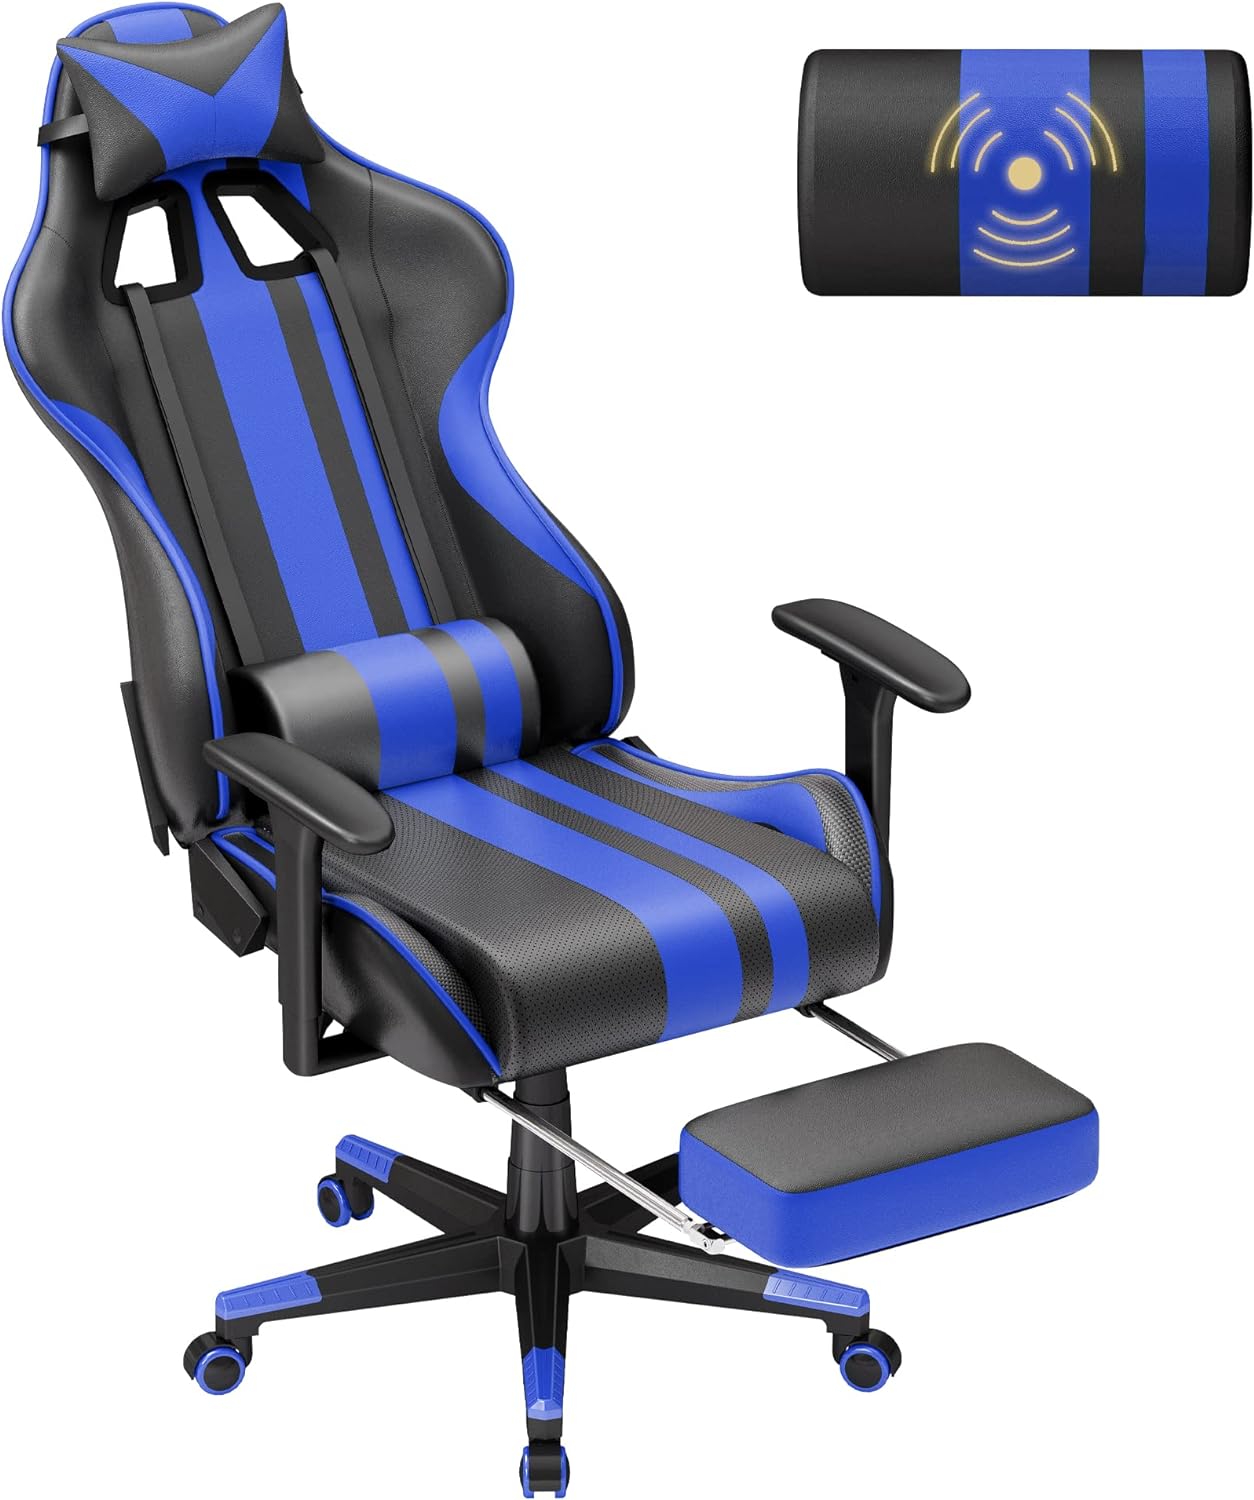 Silla de juegos azul con reposapiés sillas ergonómicas de cuero para adultos